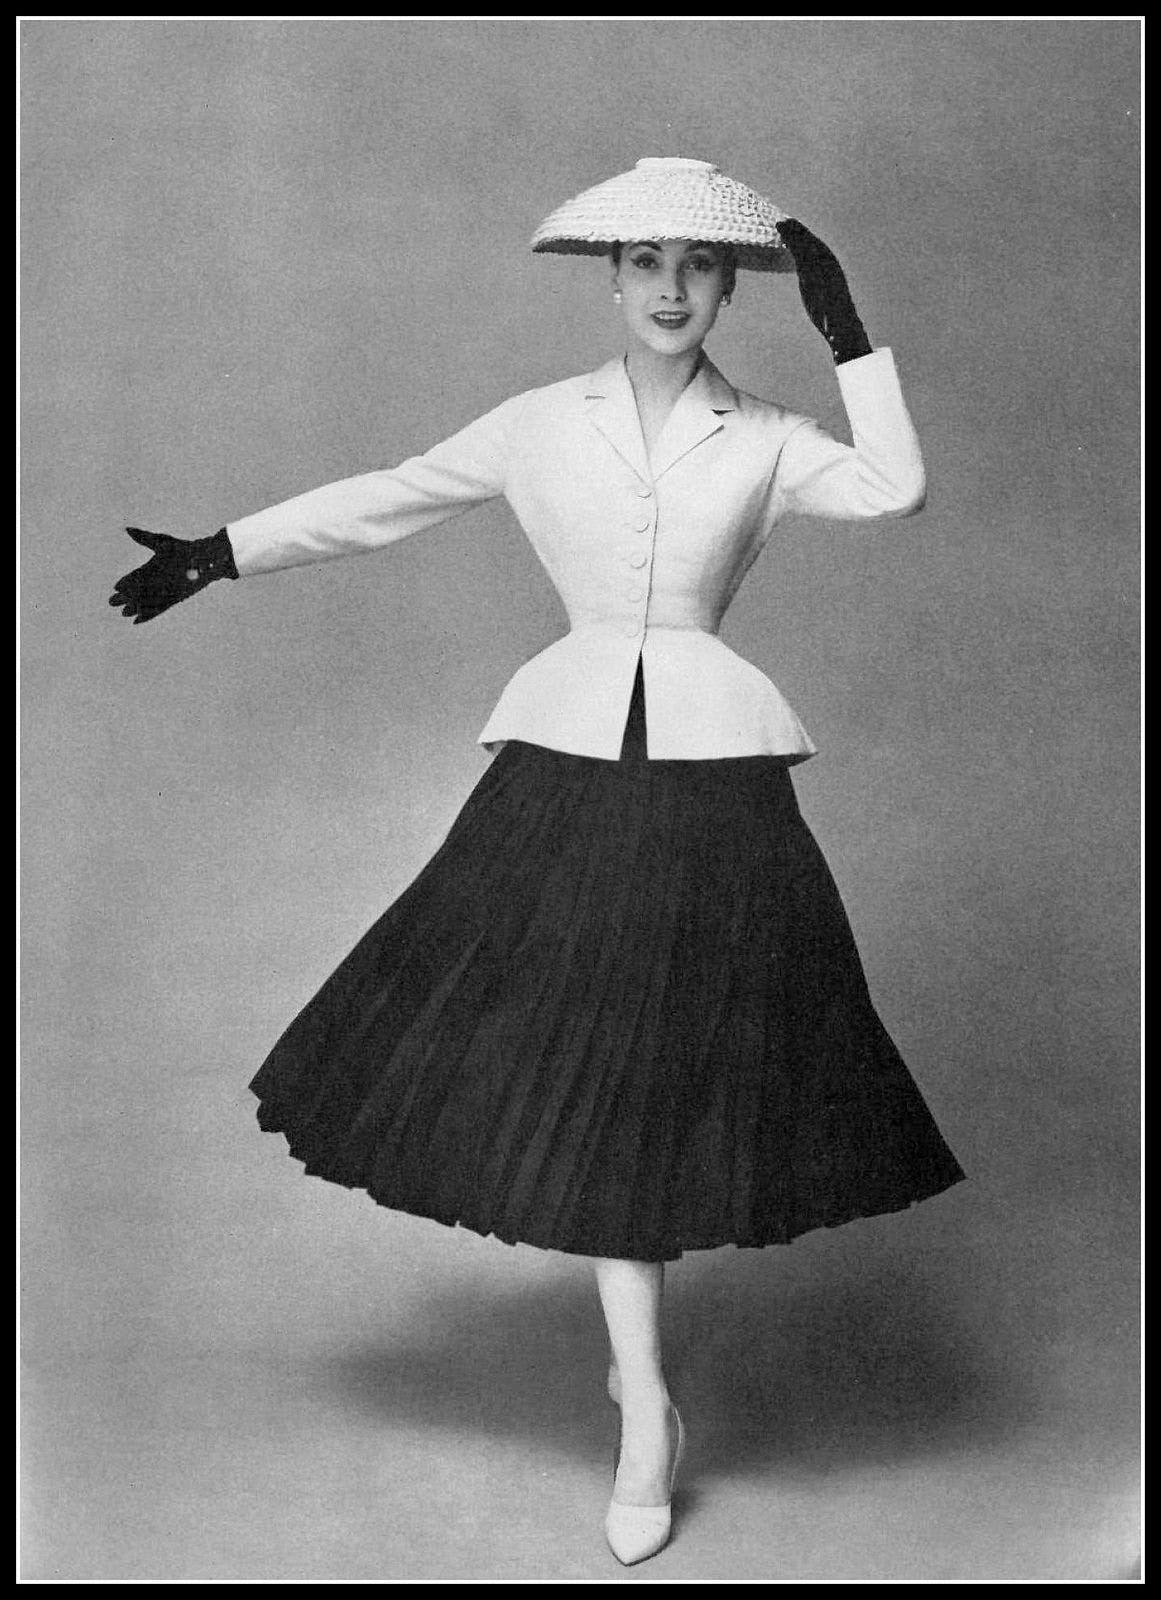 clothing apparel skirt person human hat dress